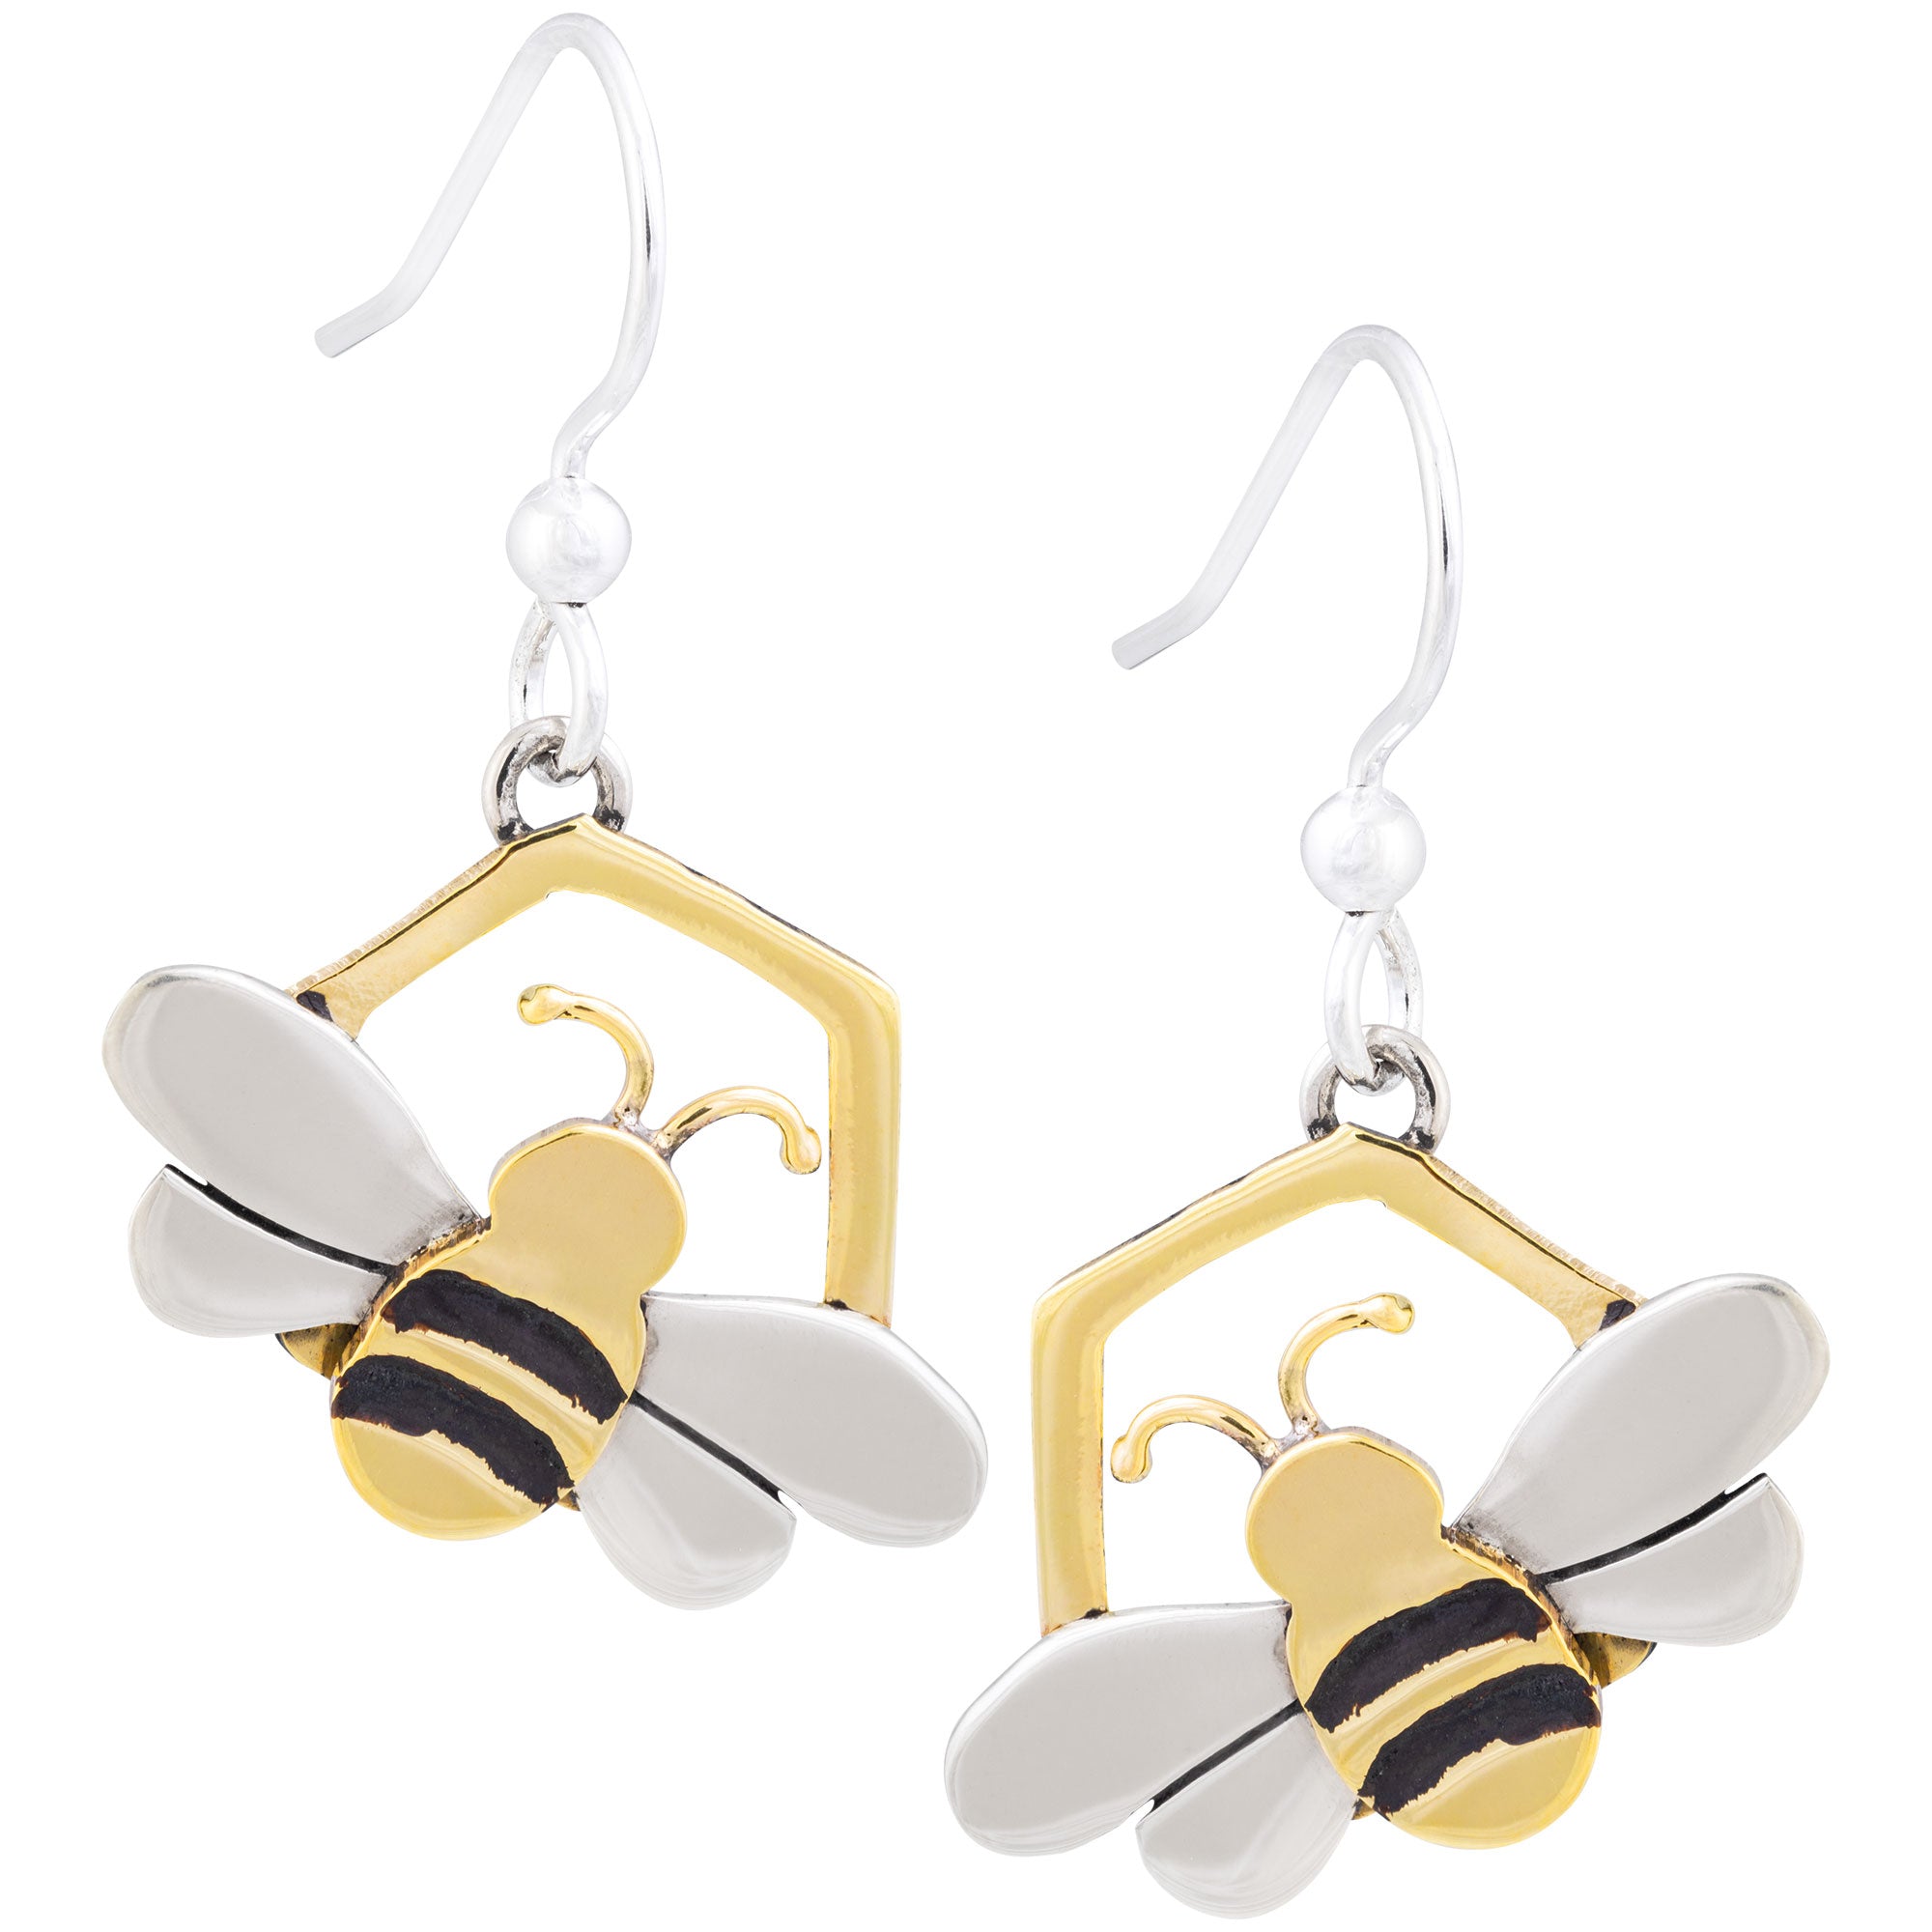 Honey Bee Mixed Metal Earrings - Medium Bee